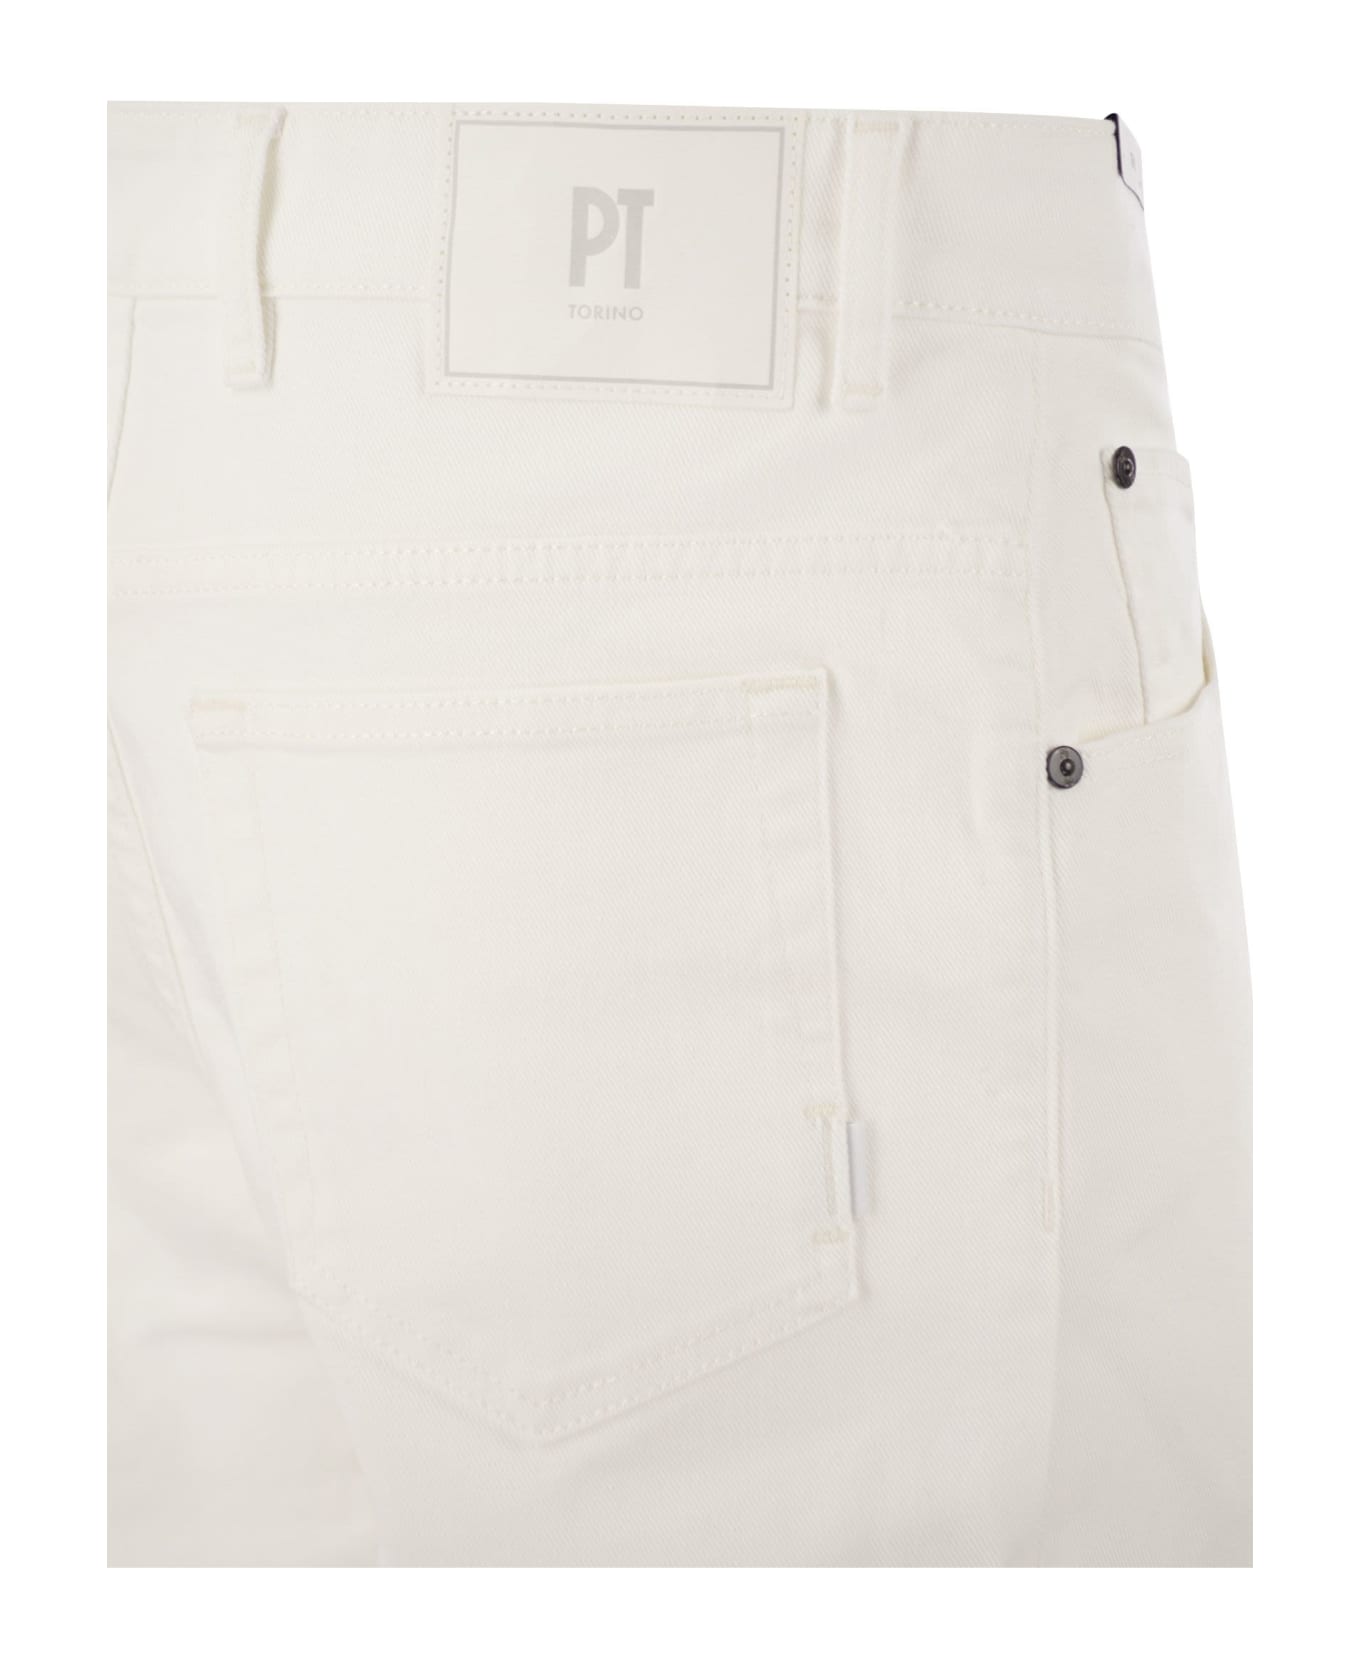 PT Torino Rebel- Straight-leg Jeans - White デニム